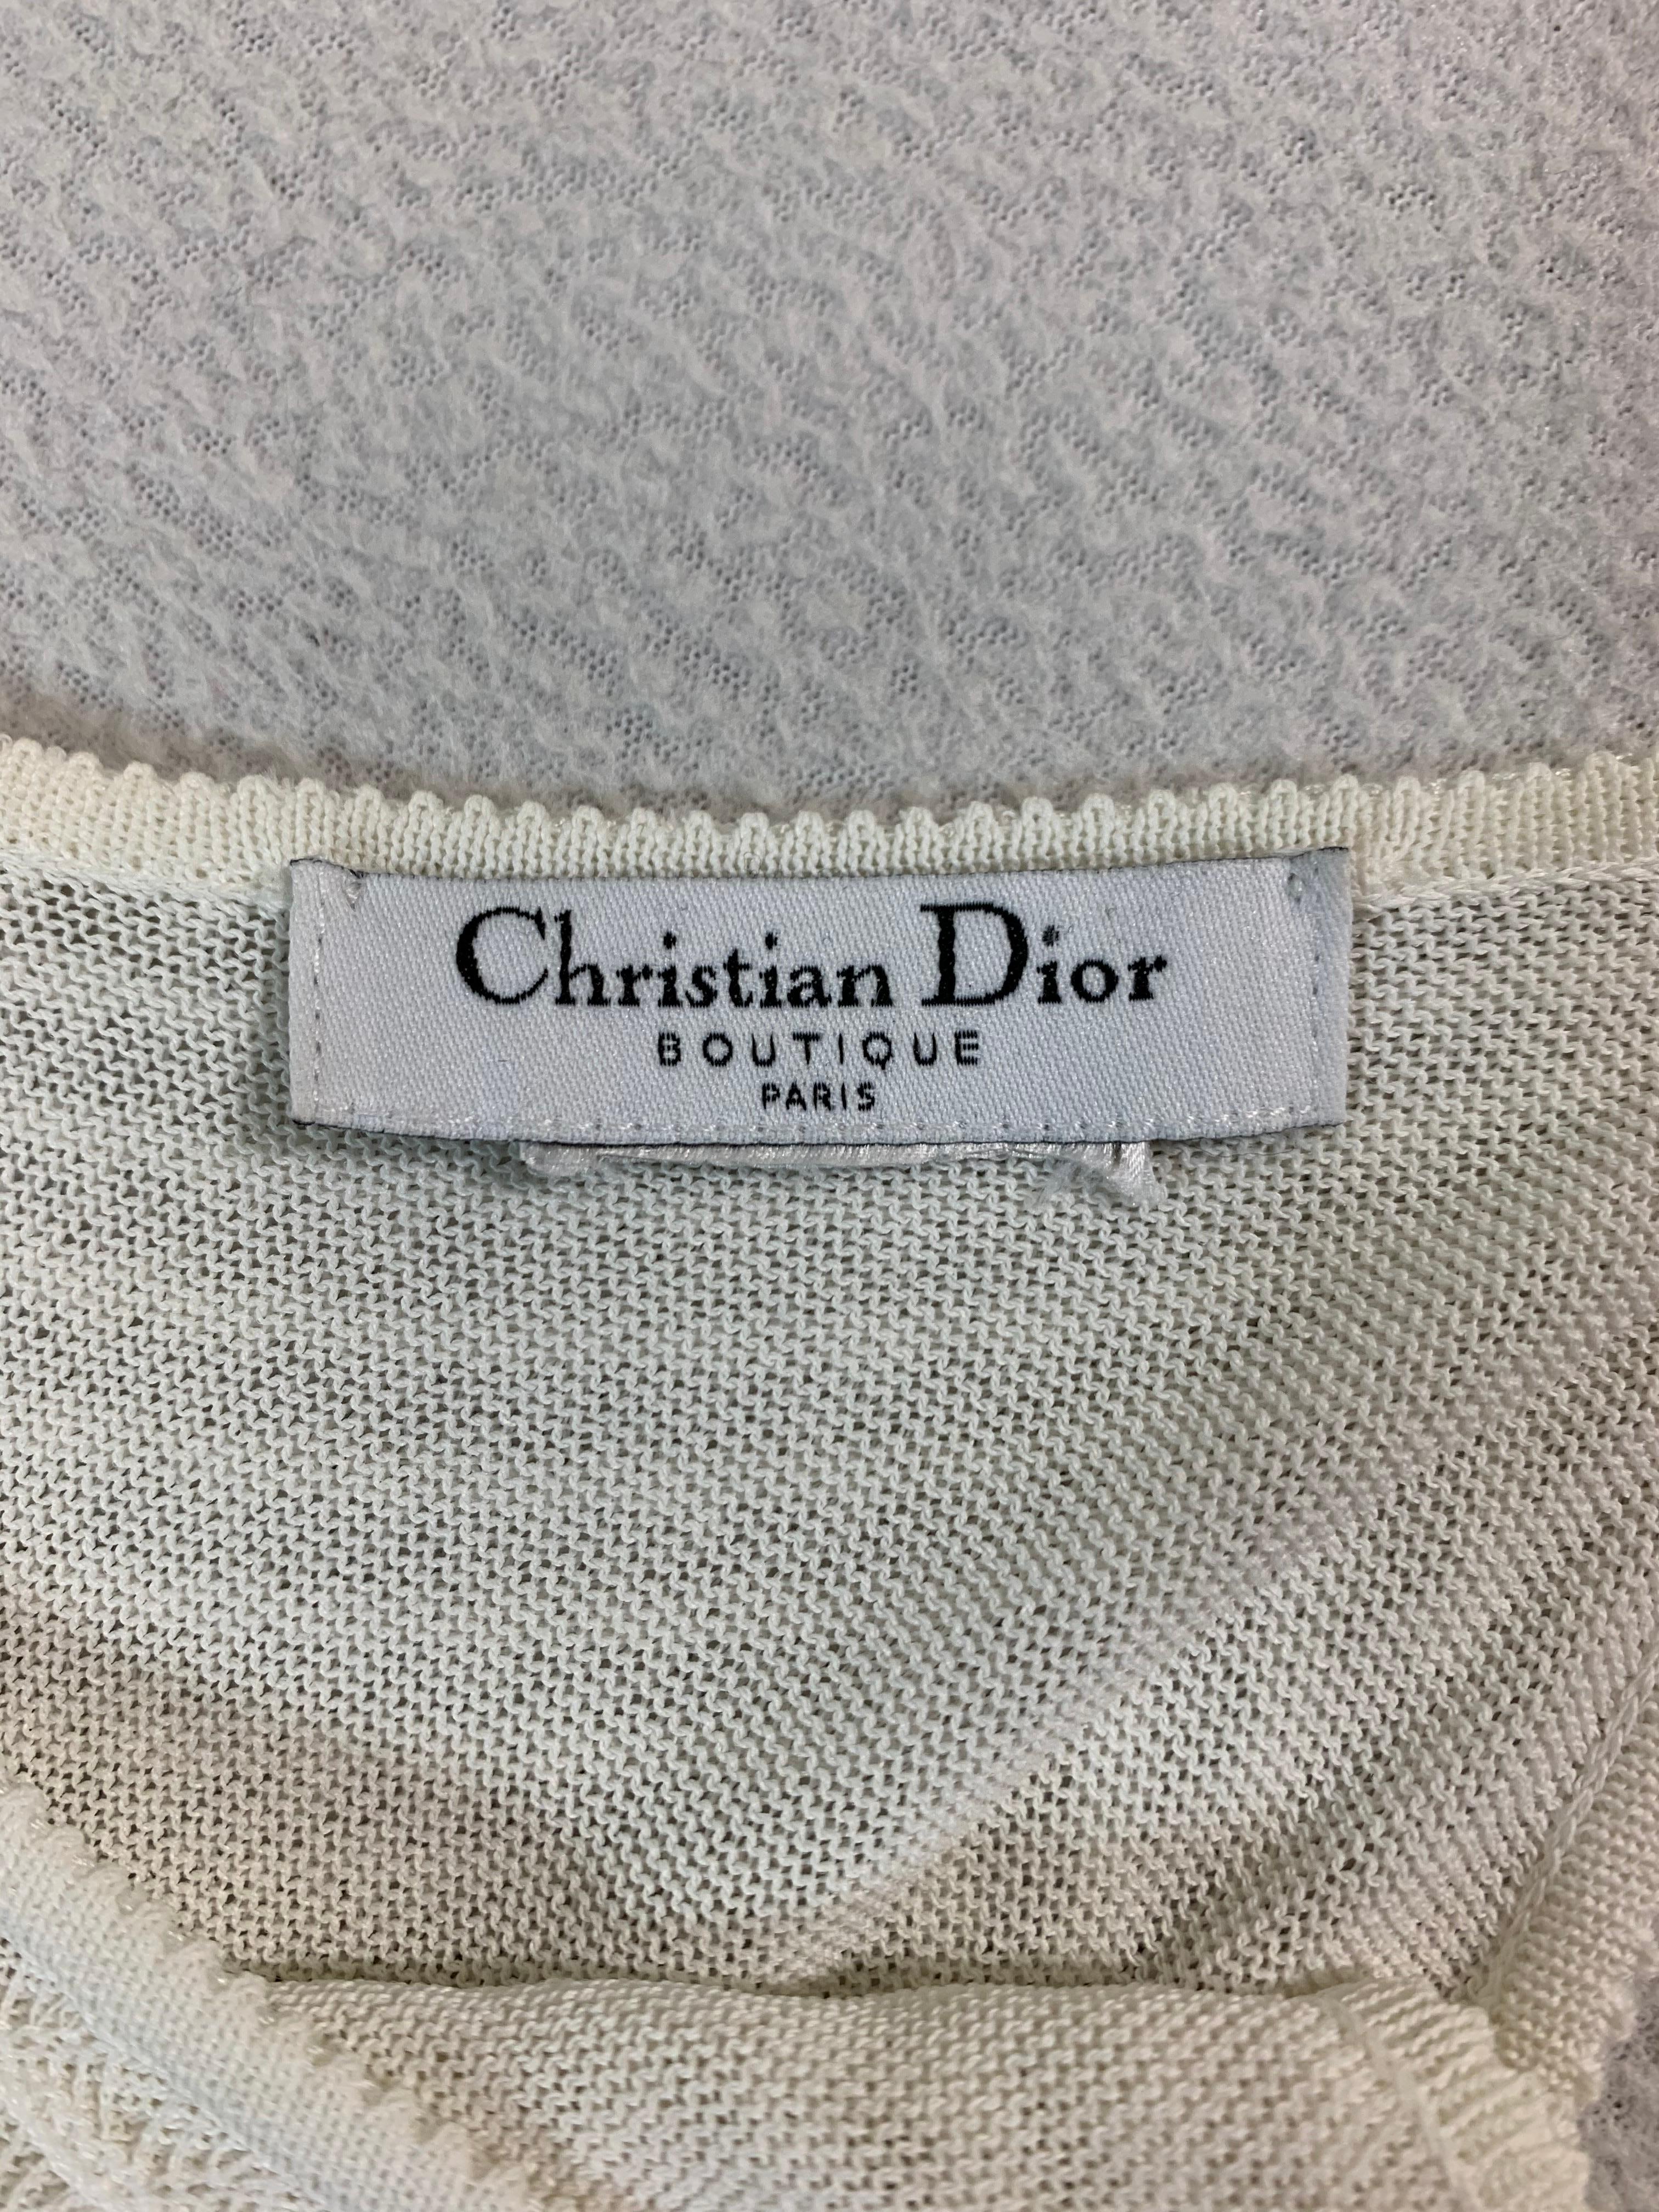 S/S 1999 Christian Dior John Galliano Runway Ivory Knit Bodycon Dress In Good Condition In Yukon, OK